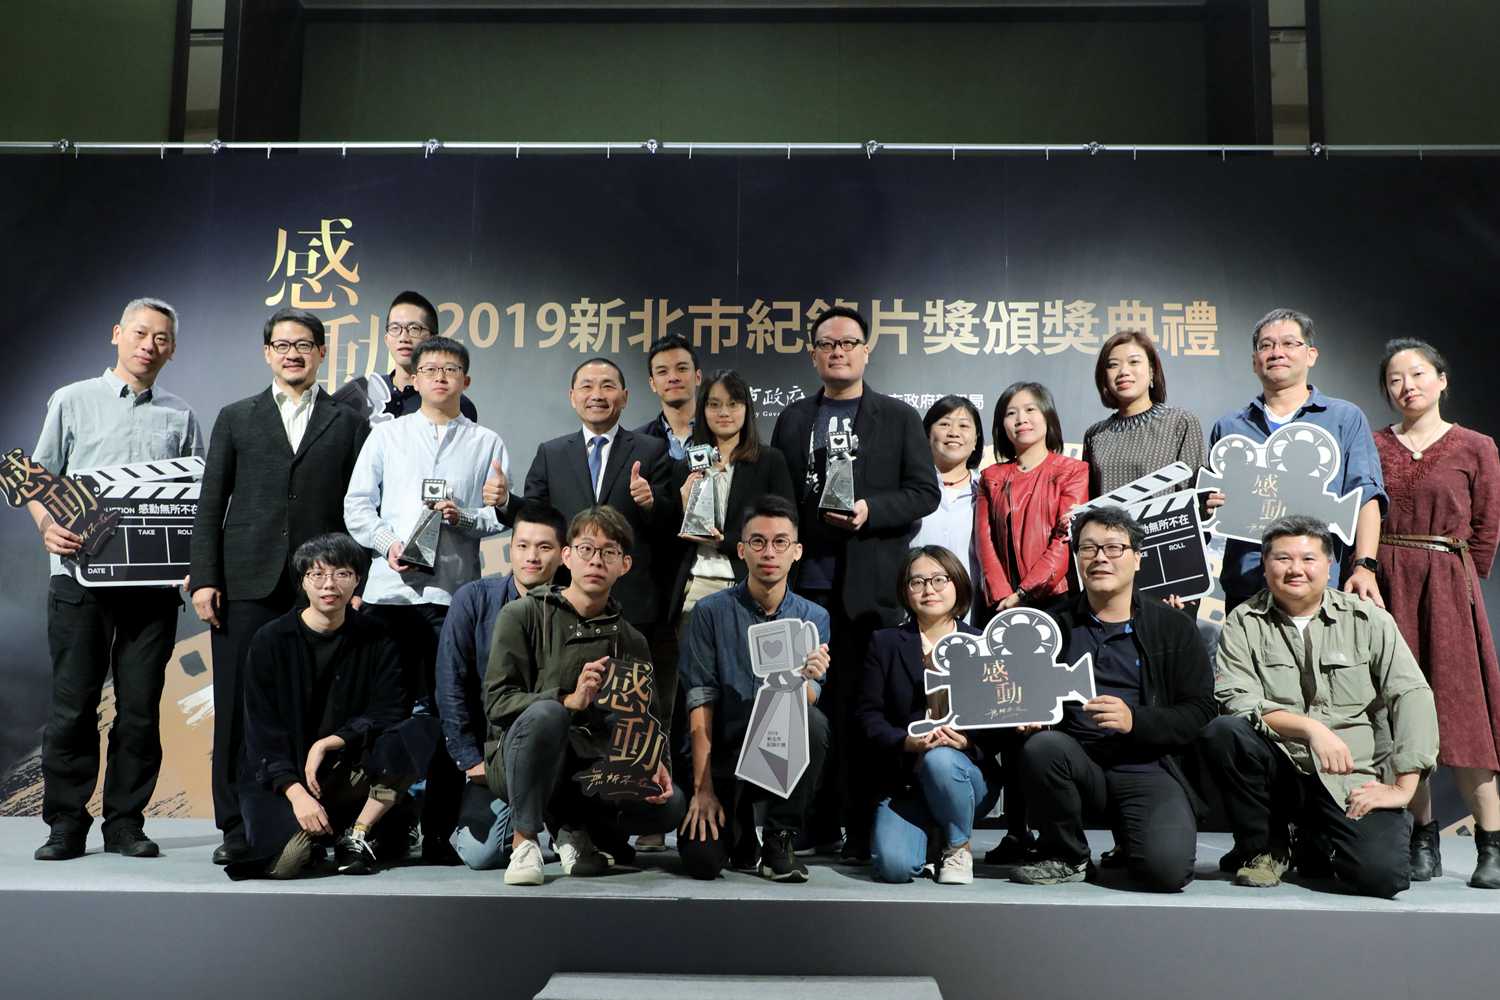 2019 award winners group photo